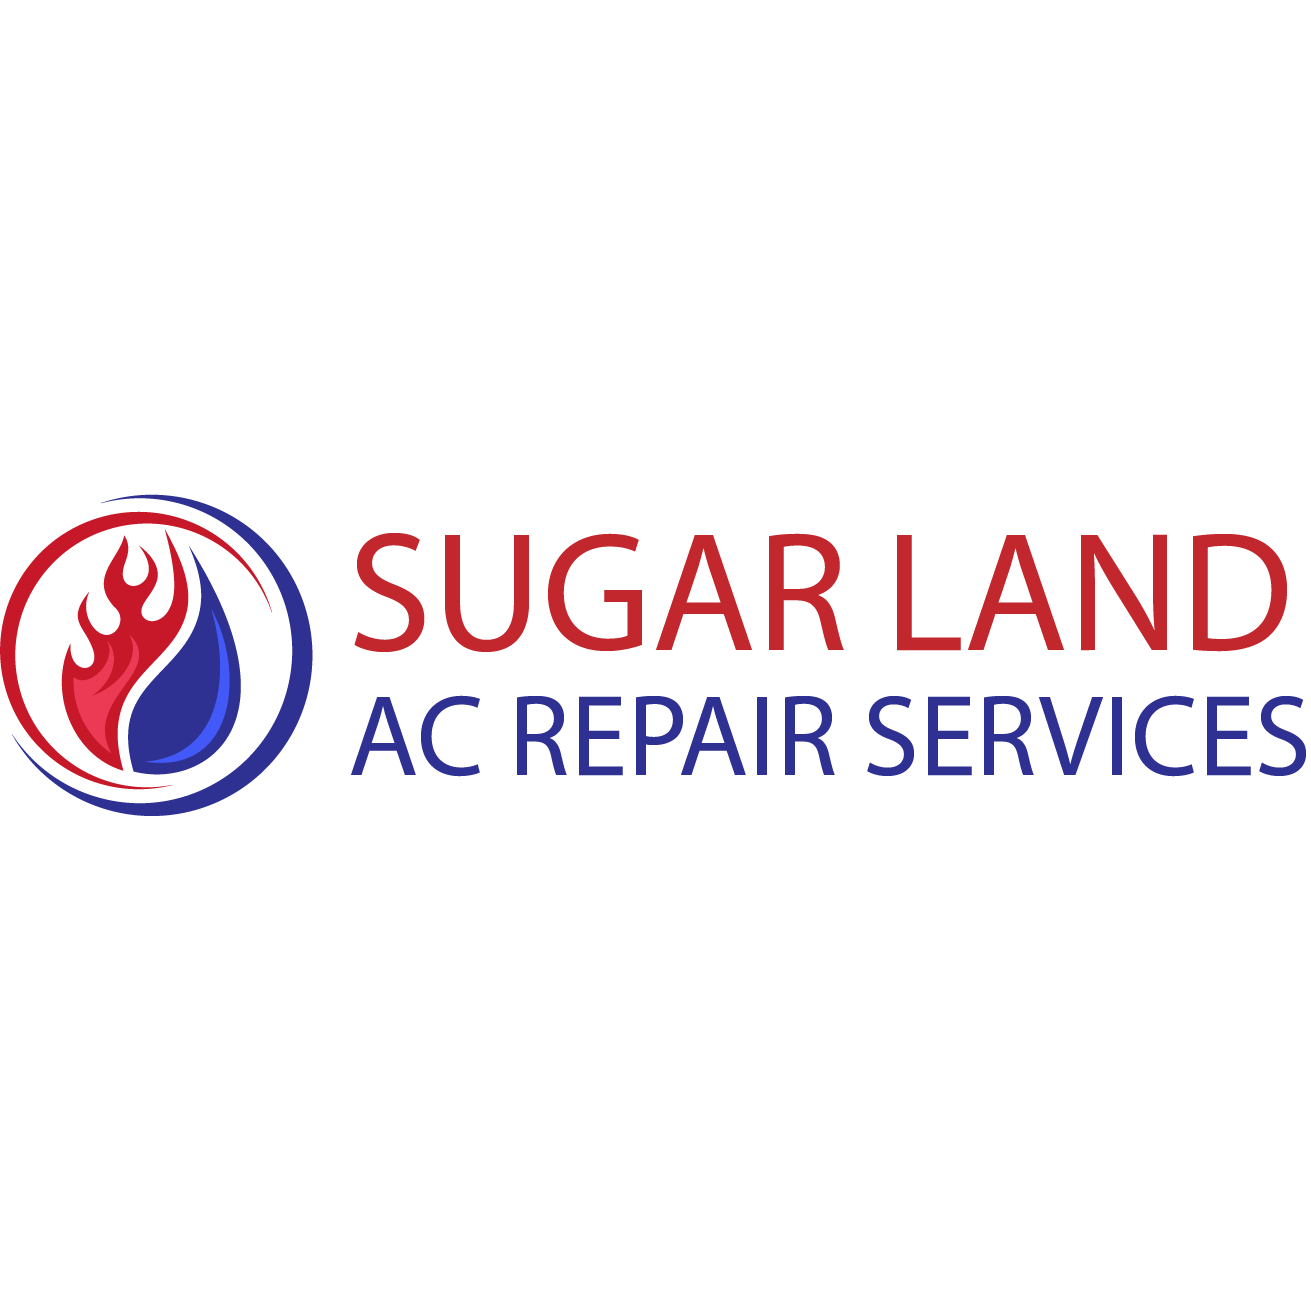 Sugar-Land-AC-Repair-Services-square@2x.png